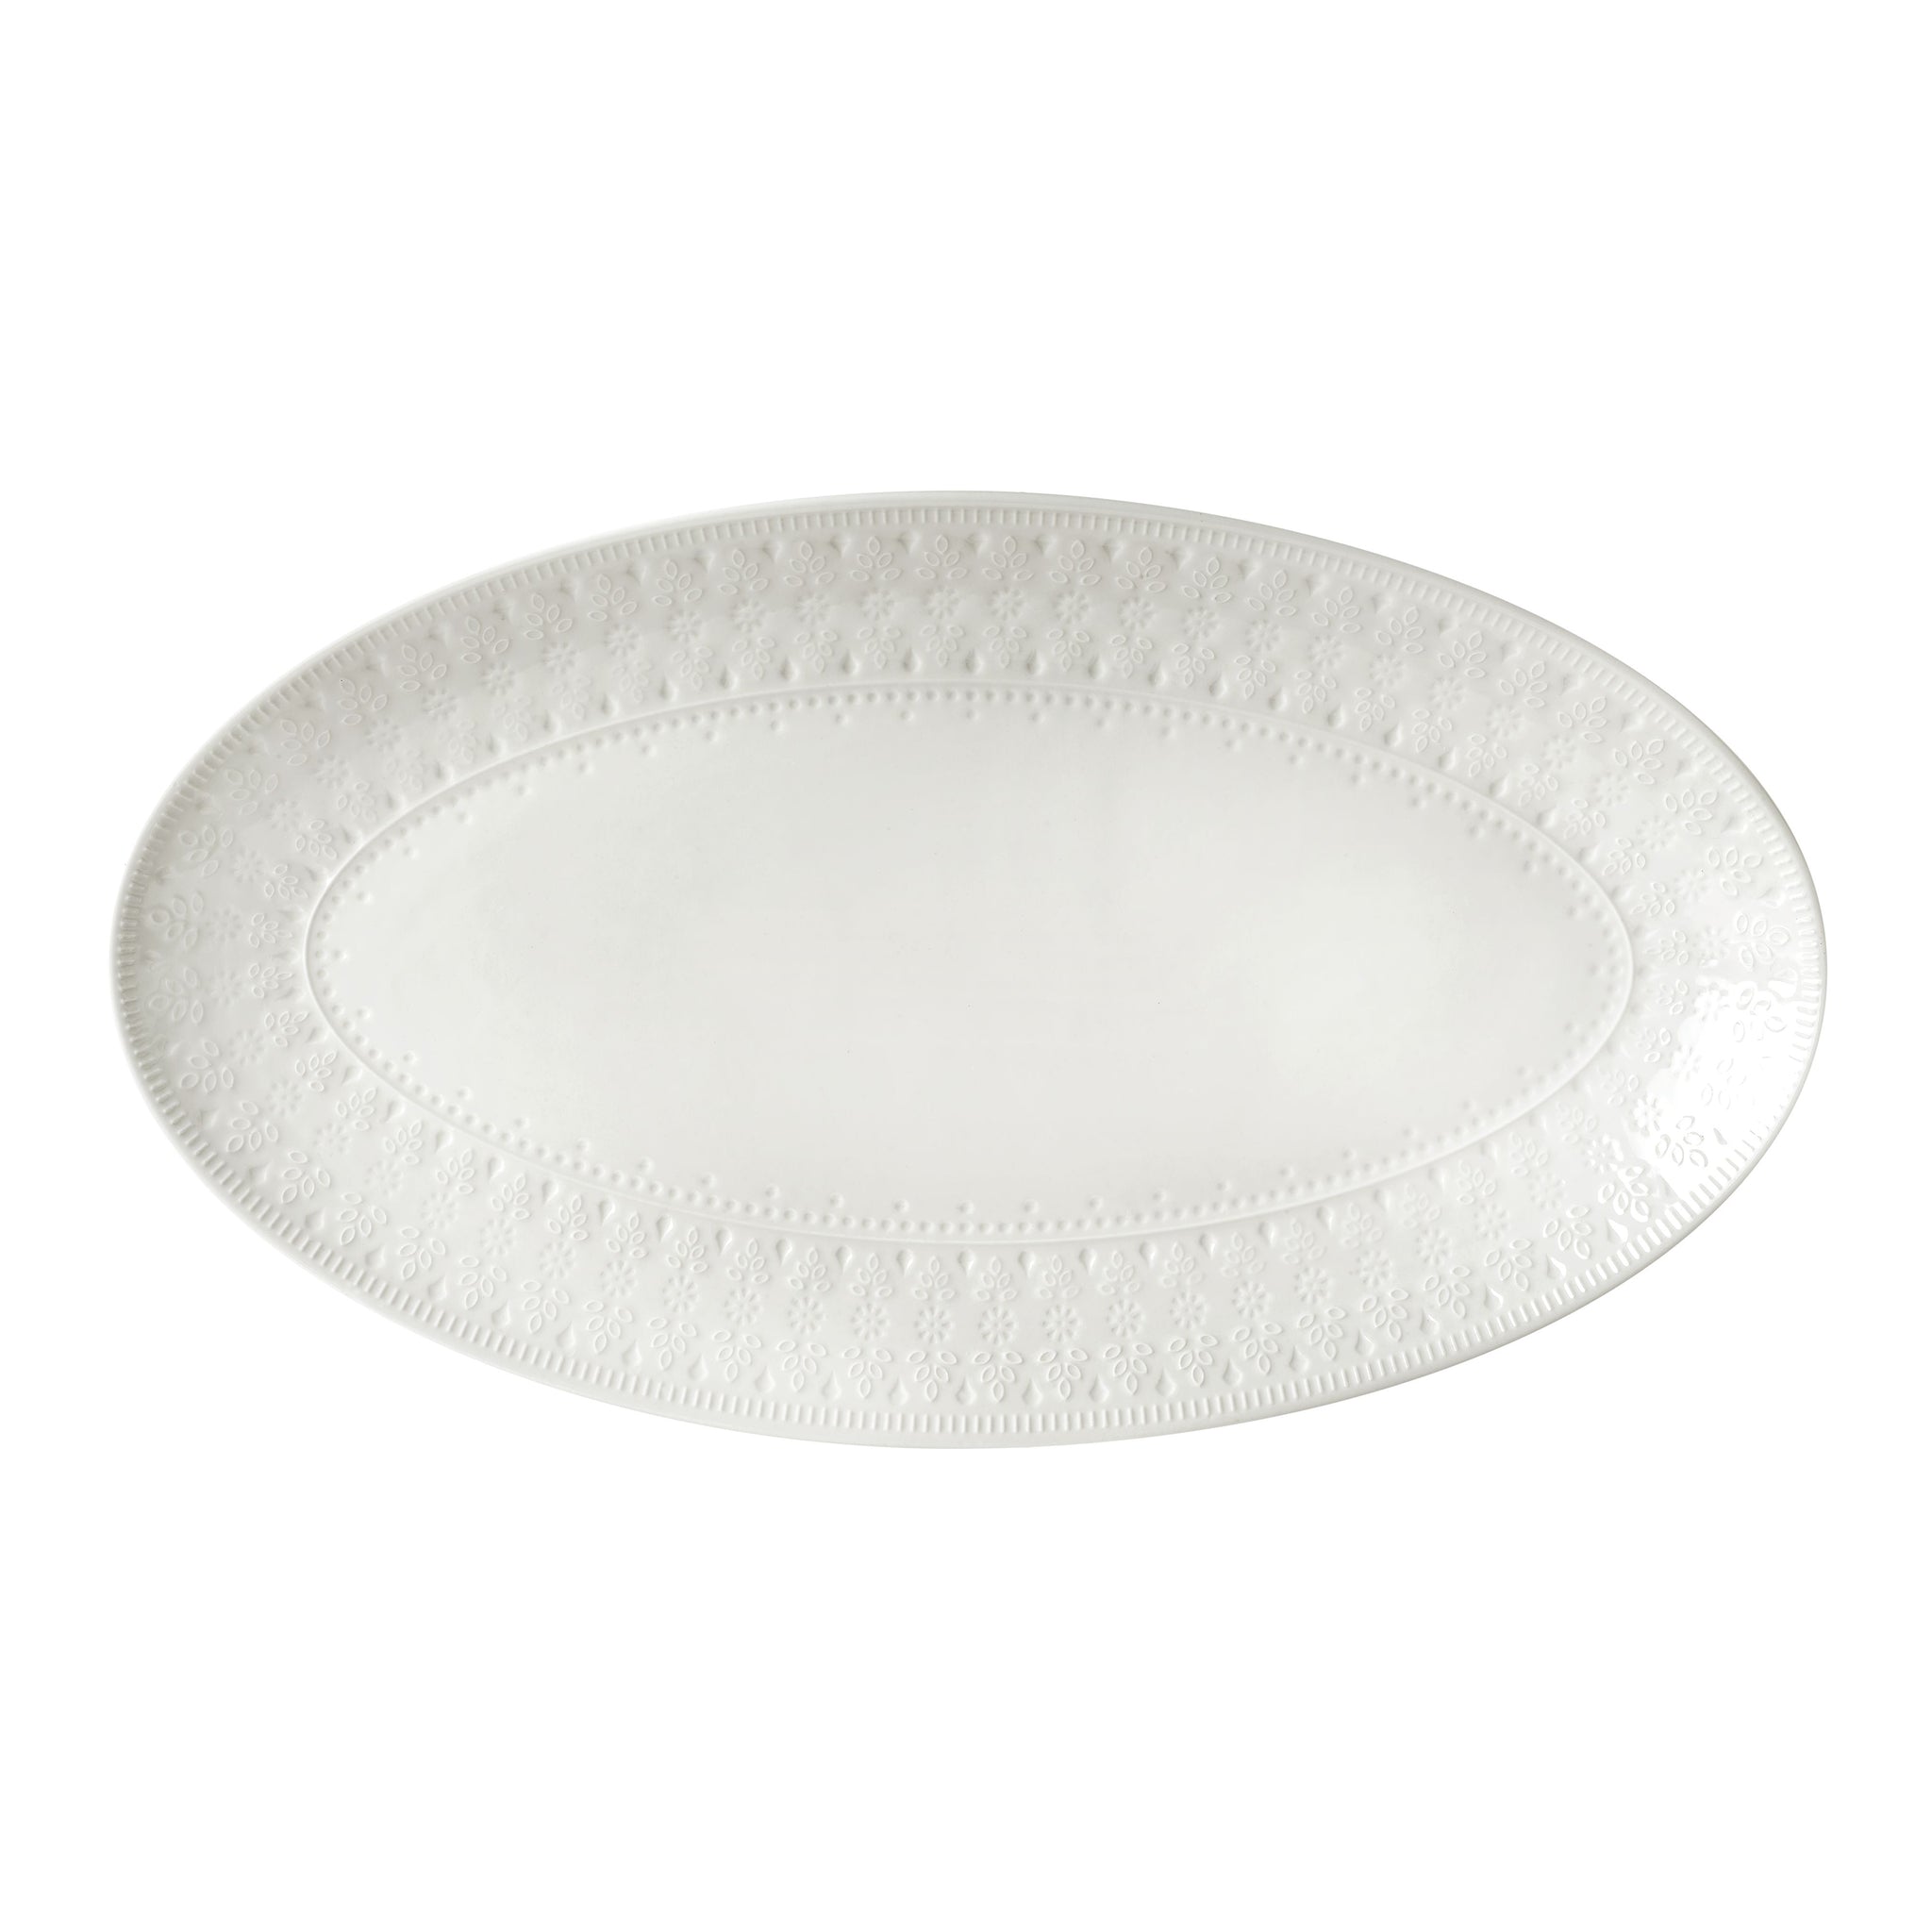 Fez Oval Platter - White - Euro Ceramica 